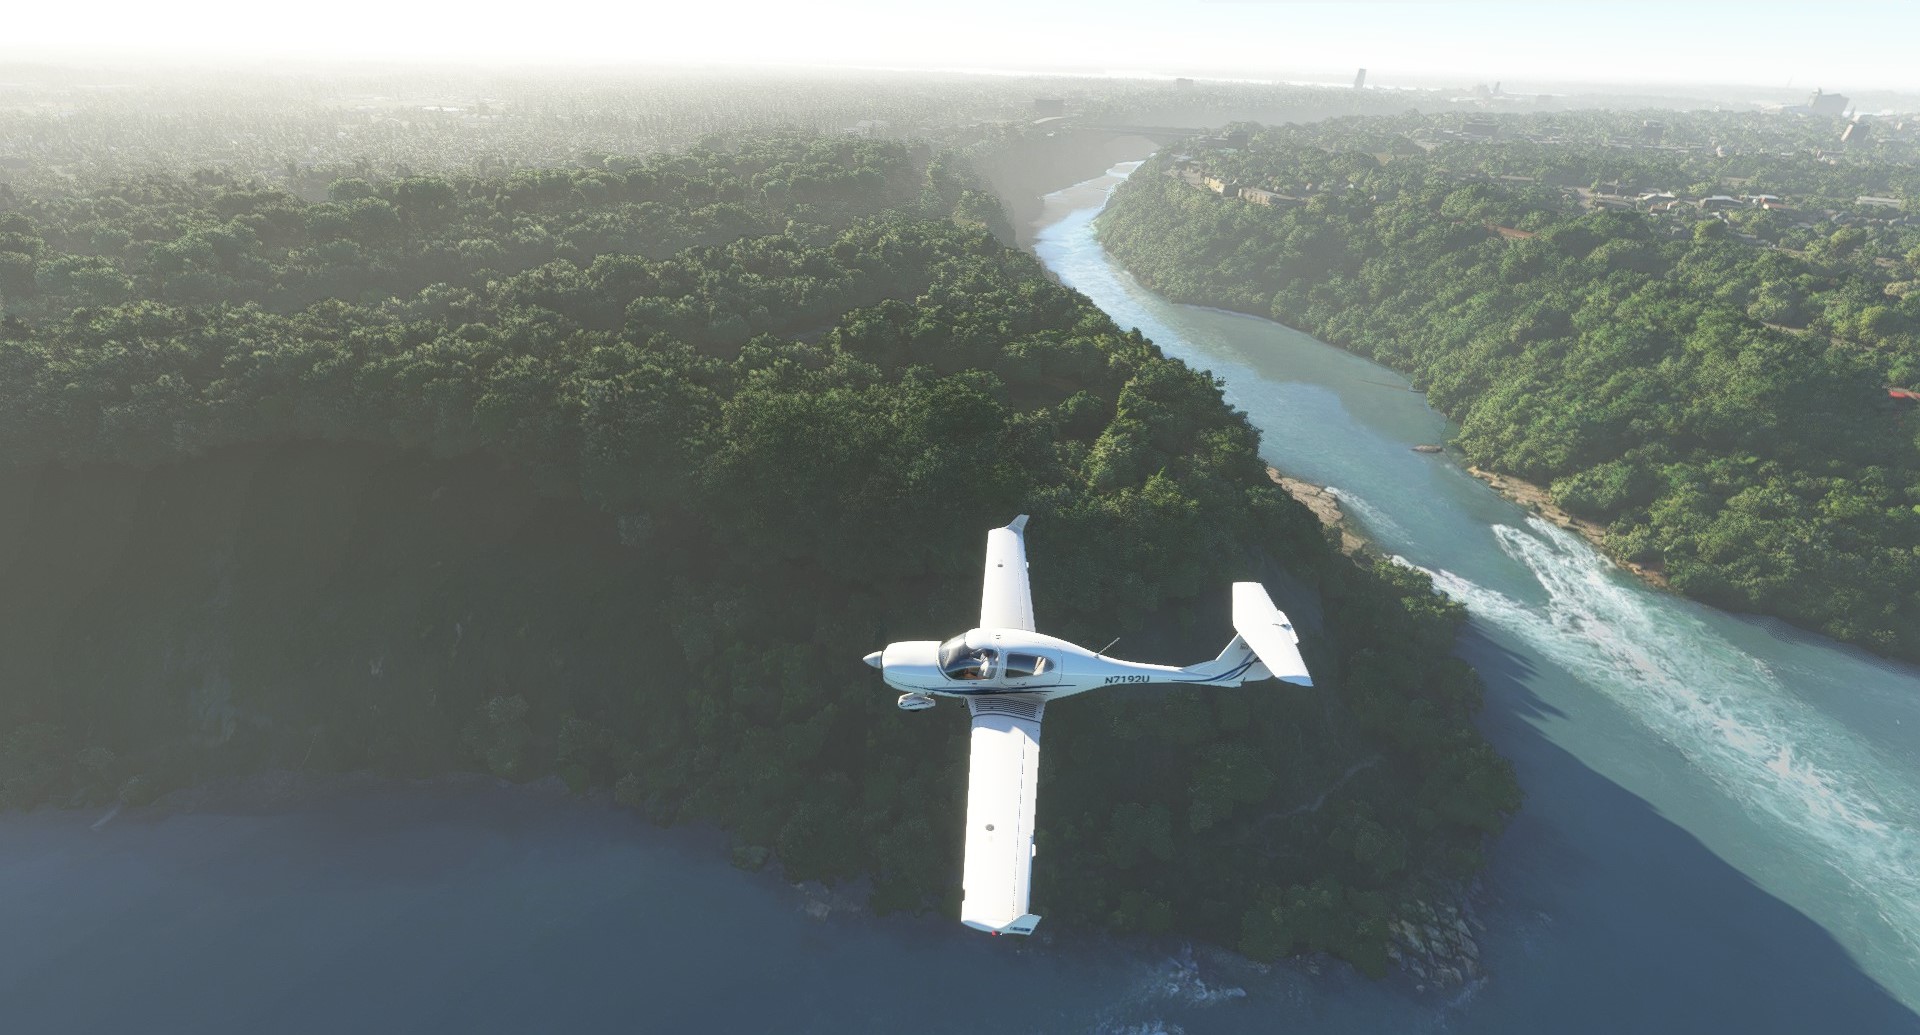 Microsoft Flight Simulator - Official Gameplay Trailer